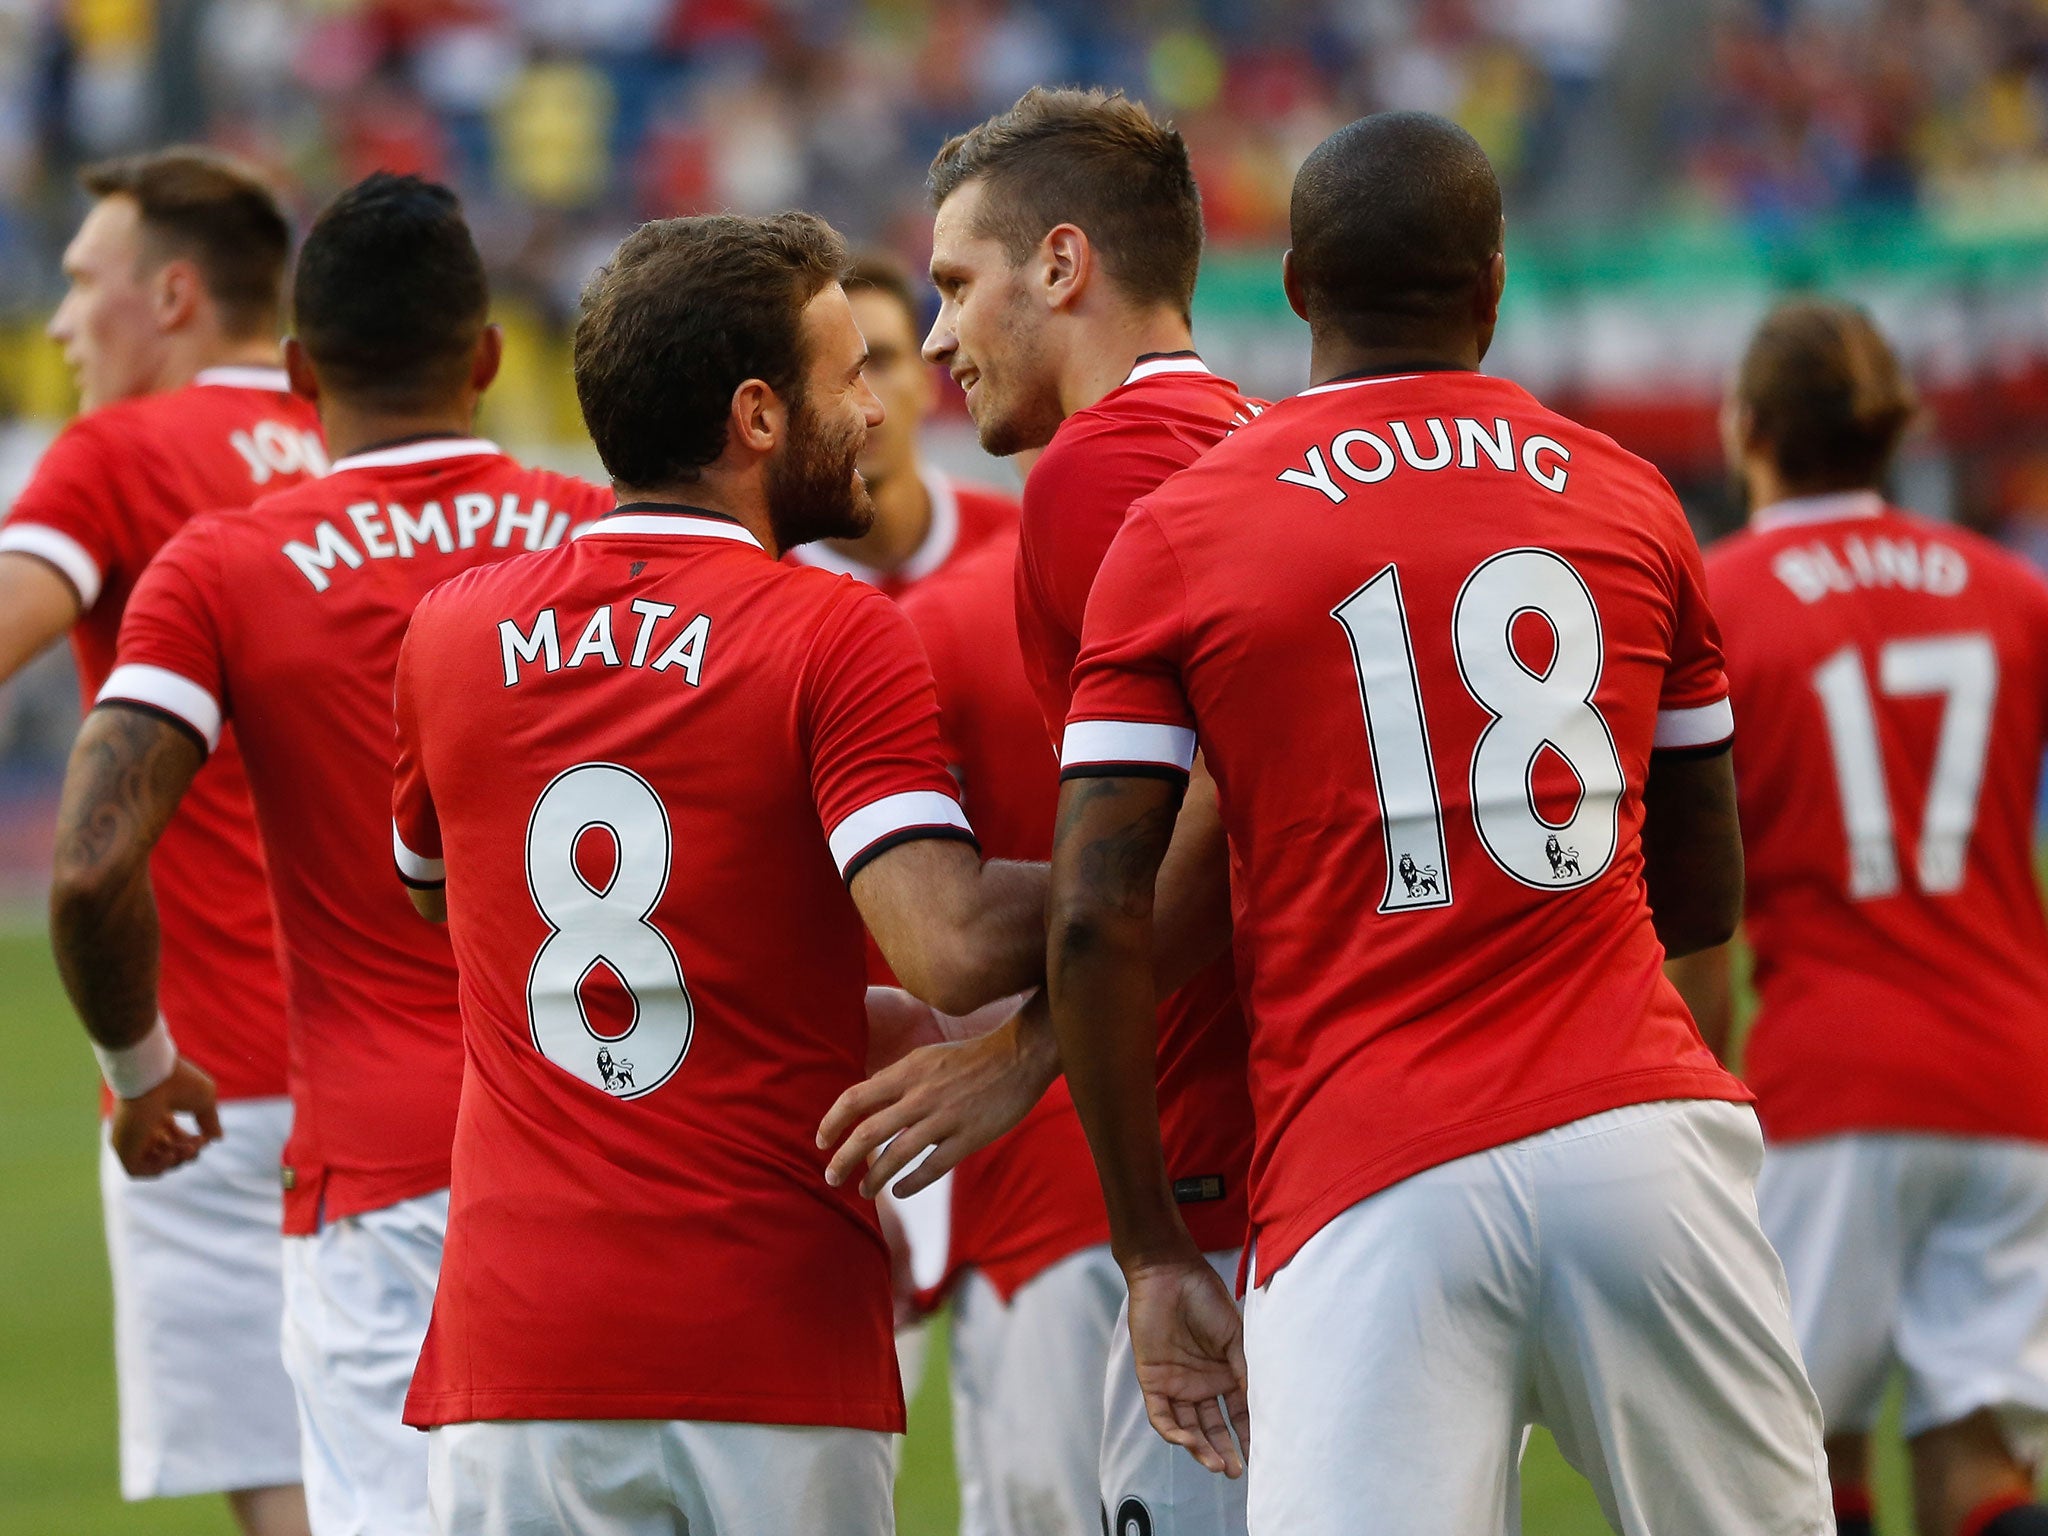 Morgan Schneiderlin celebrates scoring for Manchester United